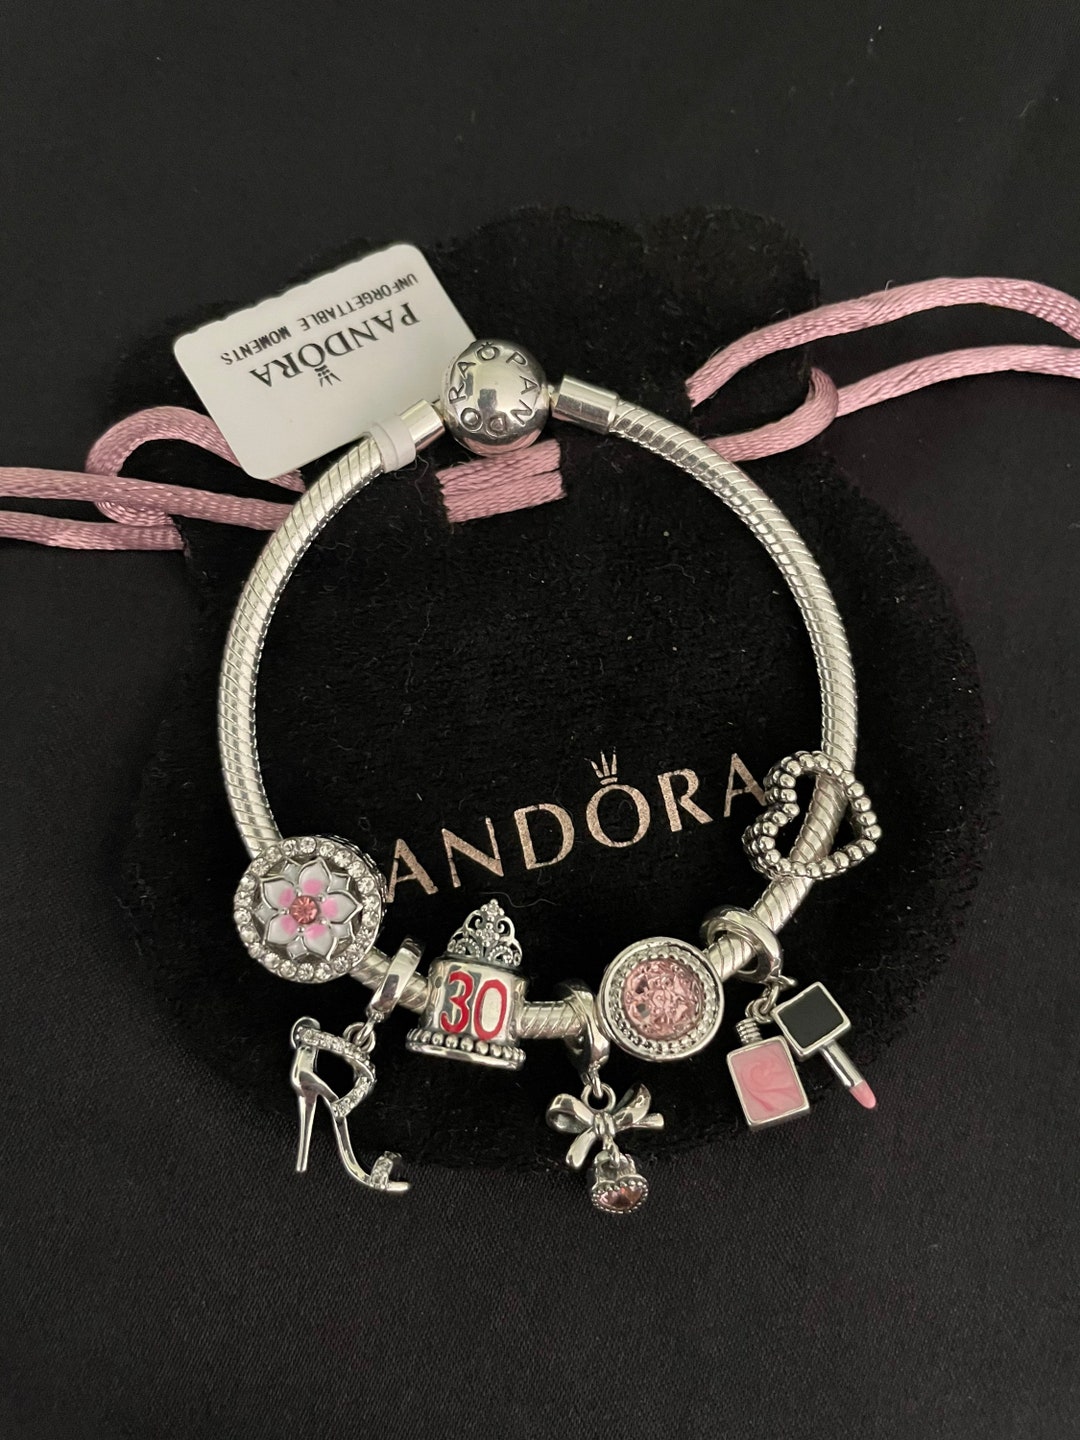 Pandora Bracelet With 30th Birthday Themed Charms - Etsy